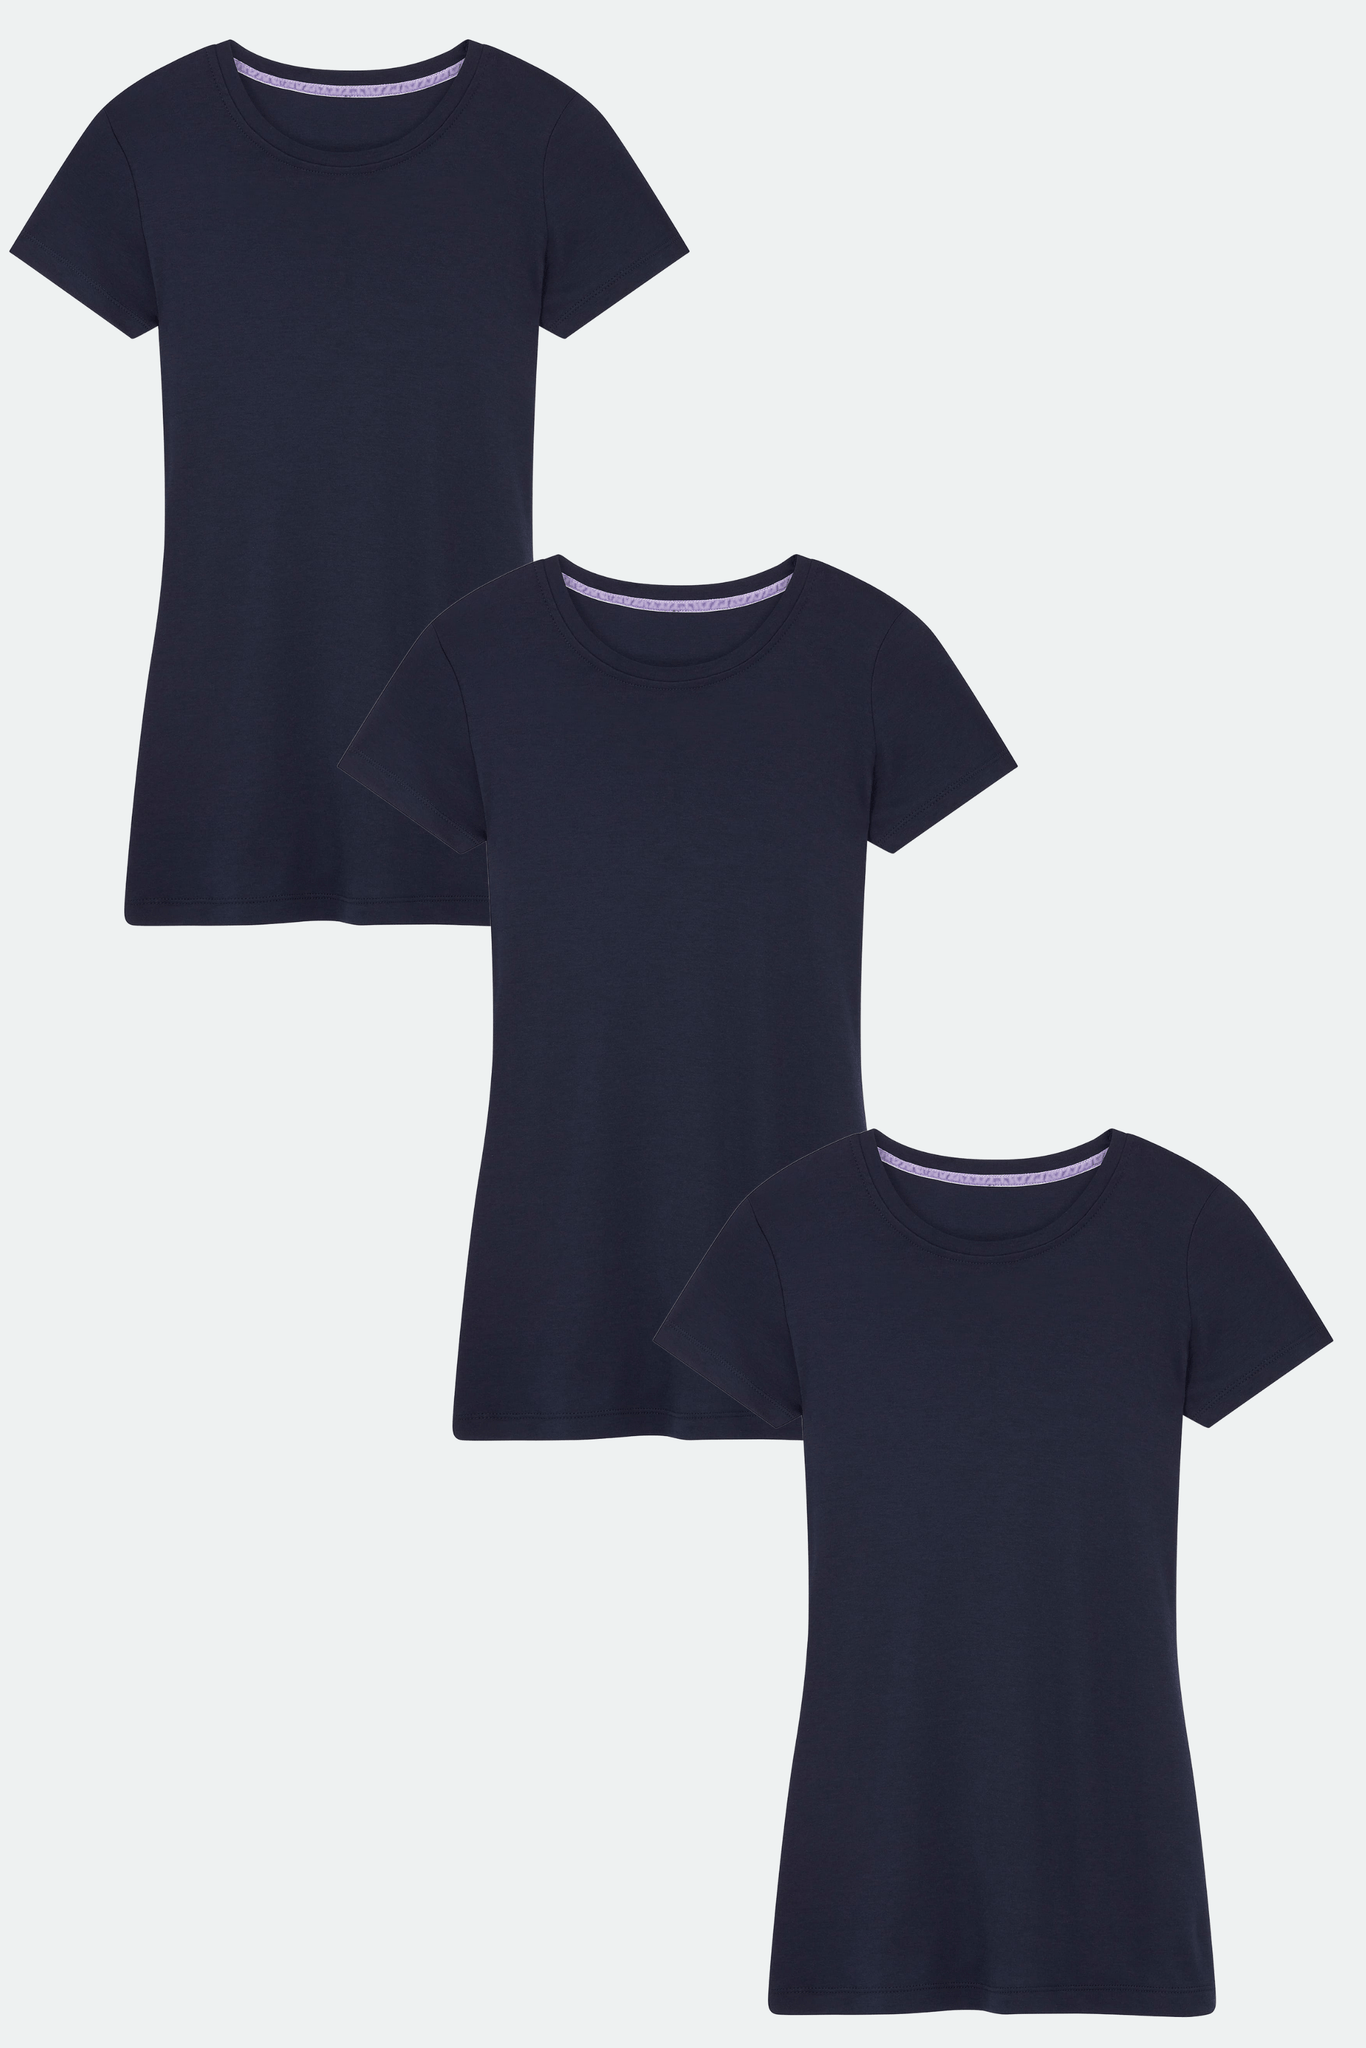 Women's Navy Short Sleeve Crew Neck Cotton Modal Blend T-shirt Bundle | Short Sleeve Multi Pack T-shirts | Lavender Hill Clothing